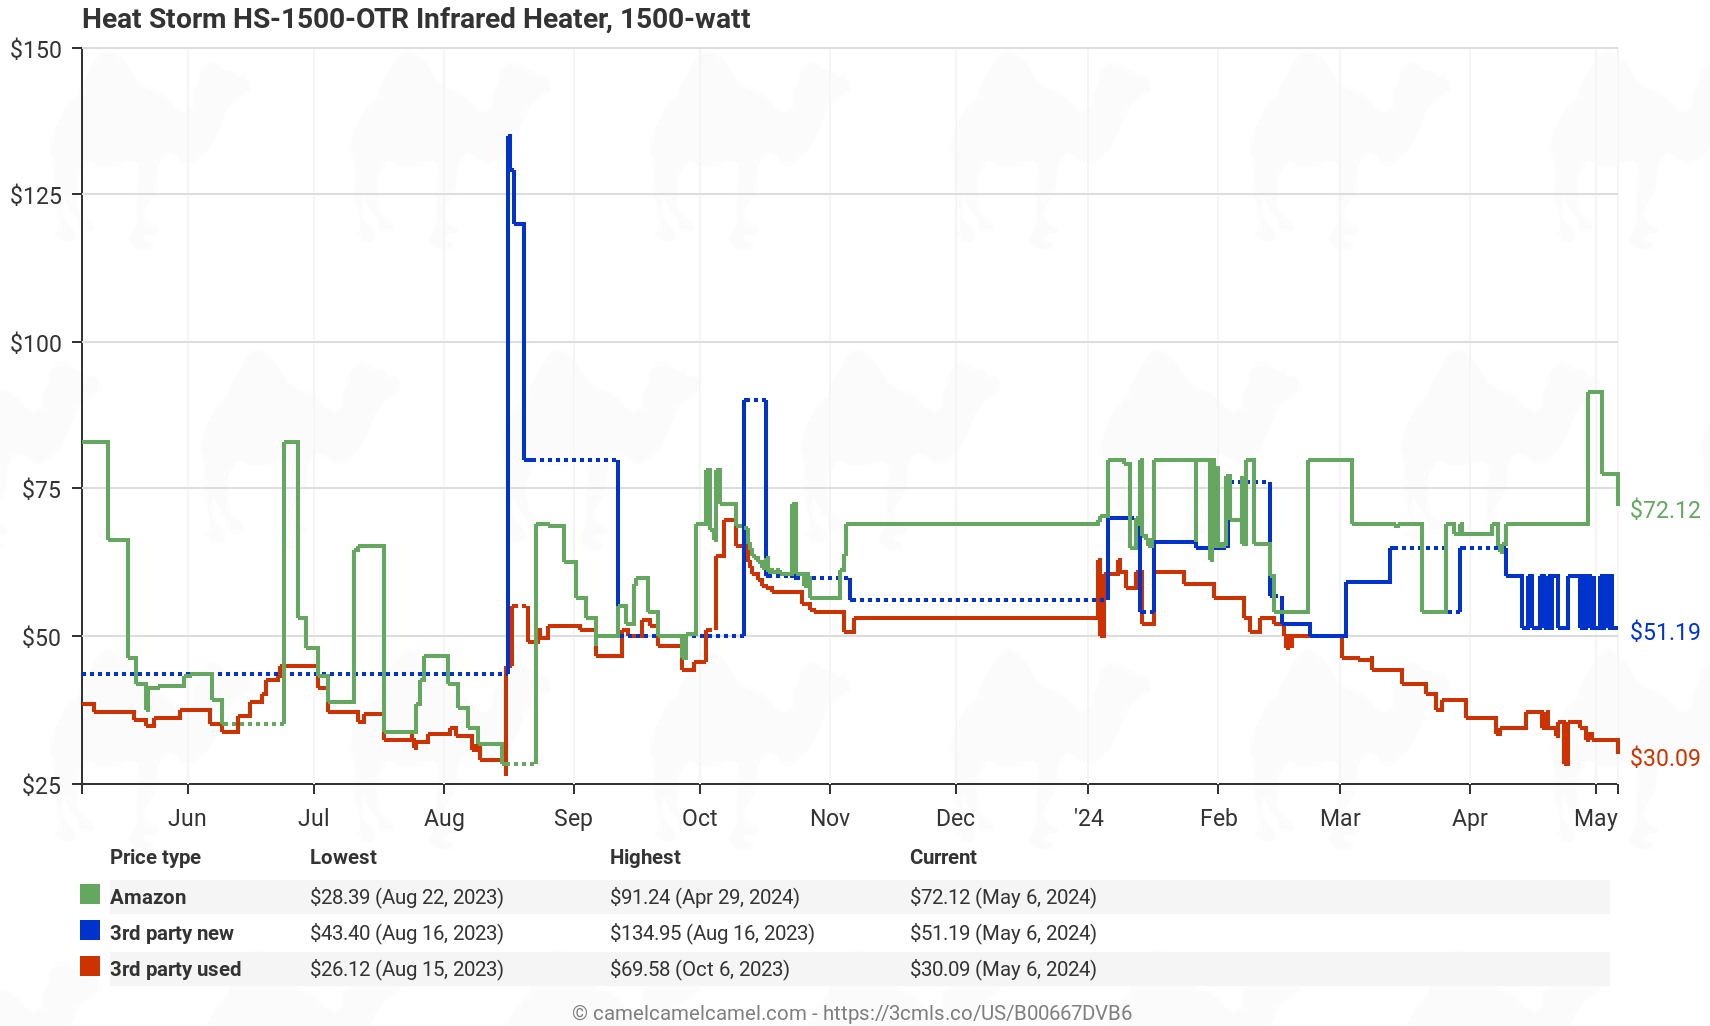 Heat Storm HS-1500-OTR Infrared Heater, 1500-watt - Price History: B00667DVB6